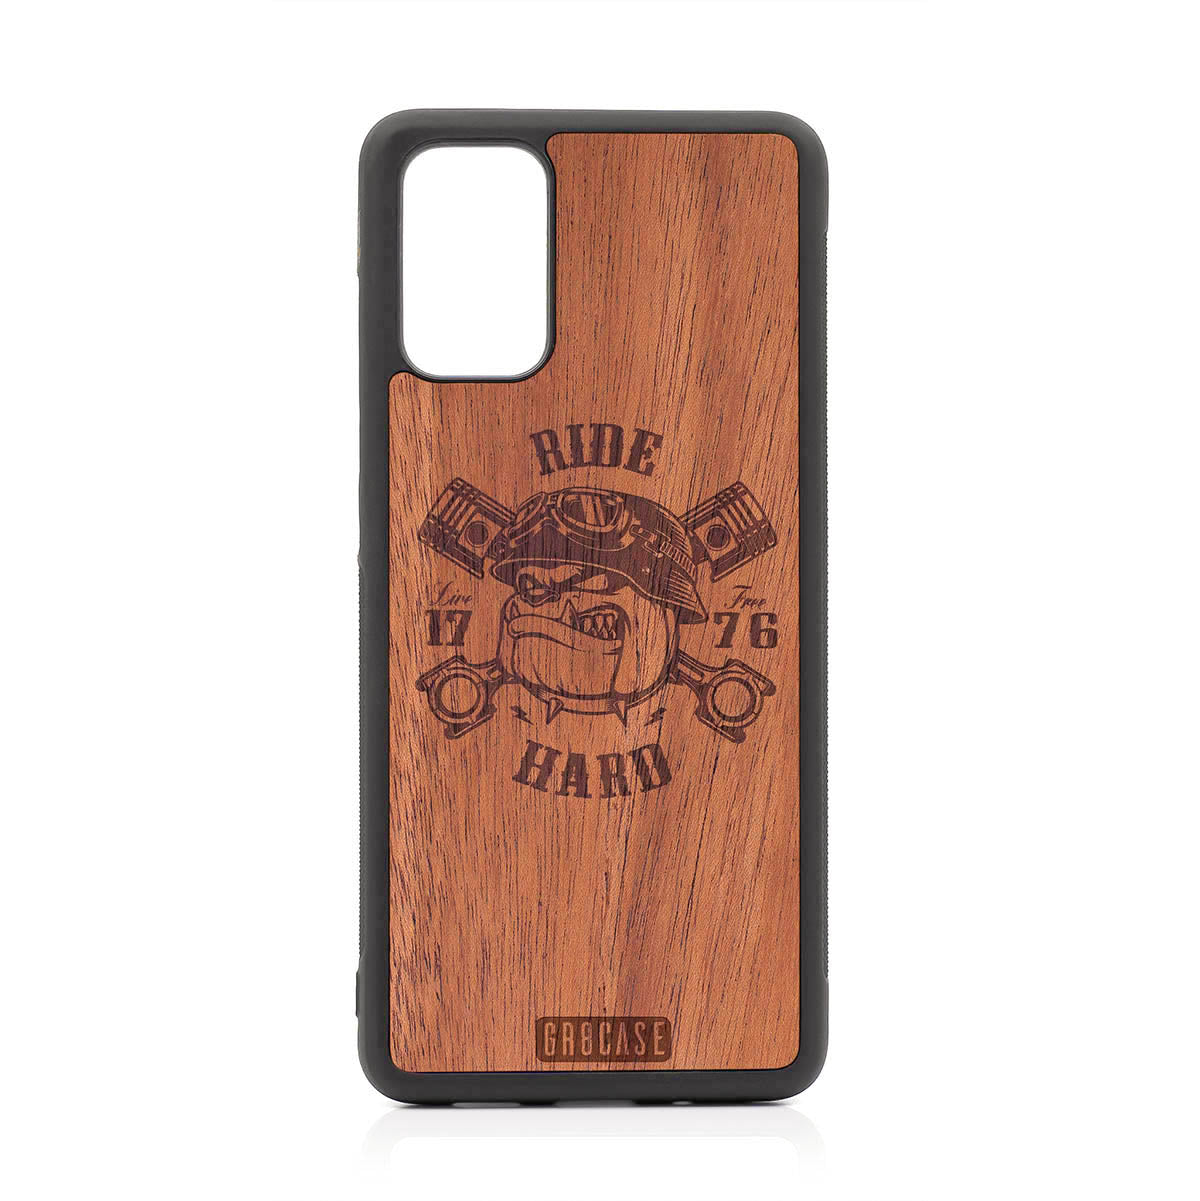 Ride Hard Live Free (Biker Dog) Design Wood Case For Samsung Galaxy S20 Plus by GR8CASE